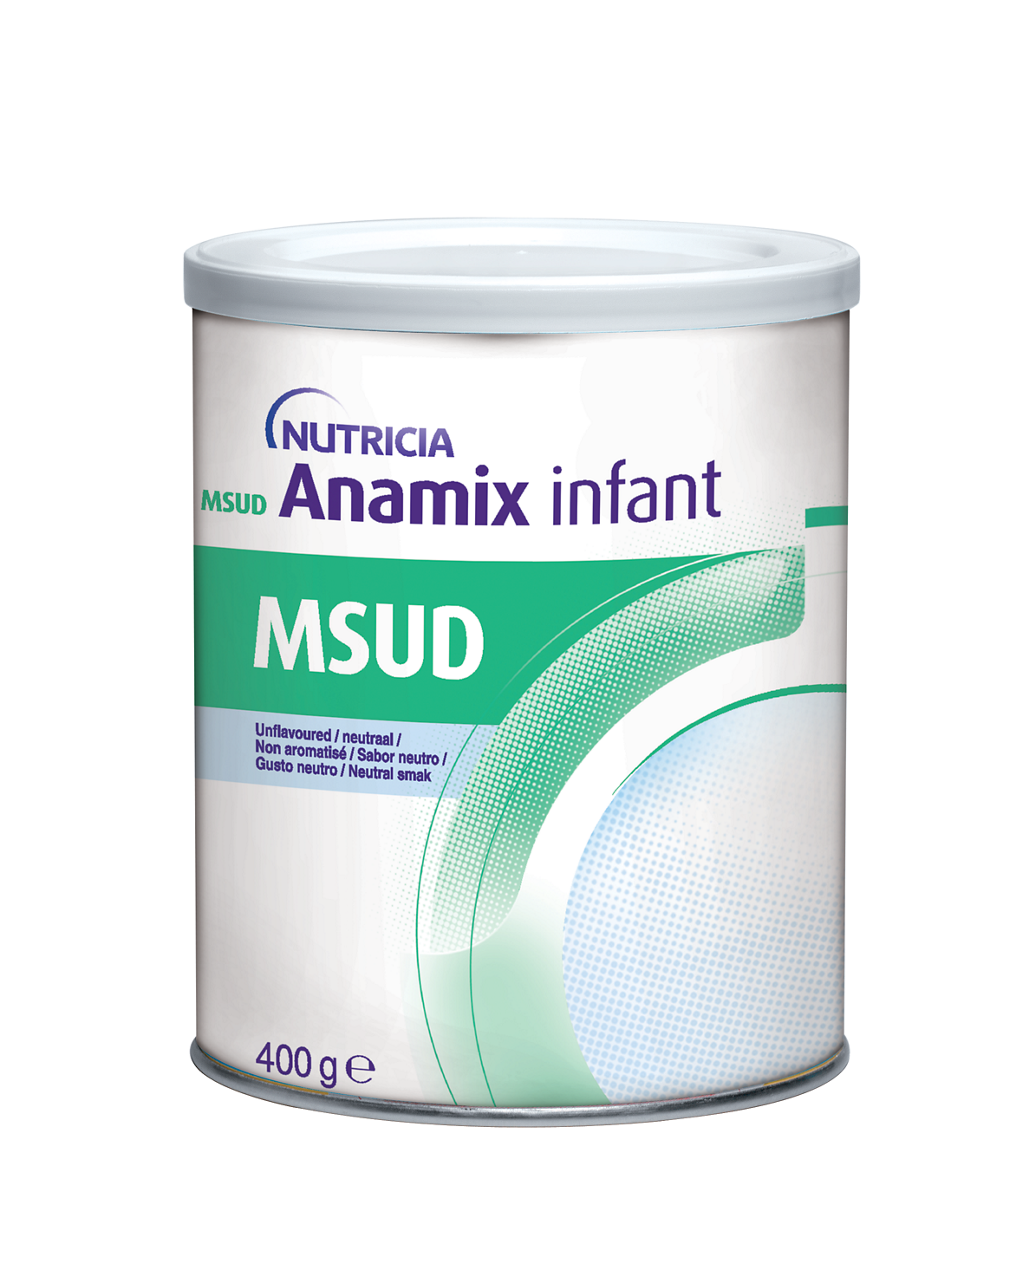 MSUD Anamix infant